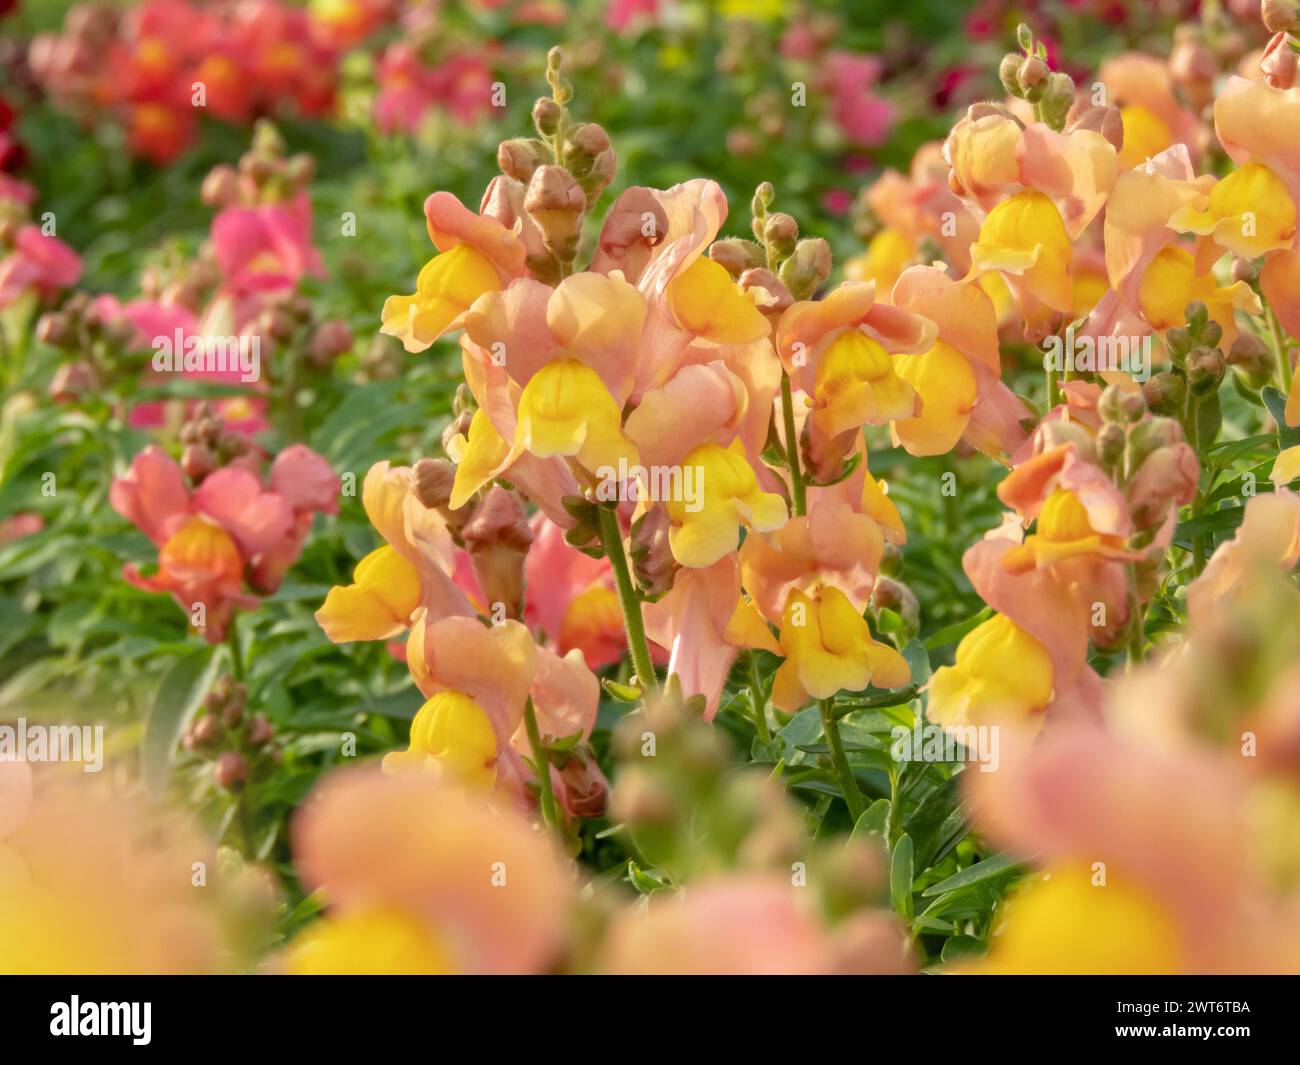 Bright flowerbed with antirrhinum majus flowering plants. Common snapdragon bright peach yellow flowers. Lion's-snap cultivar. Stock Photo